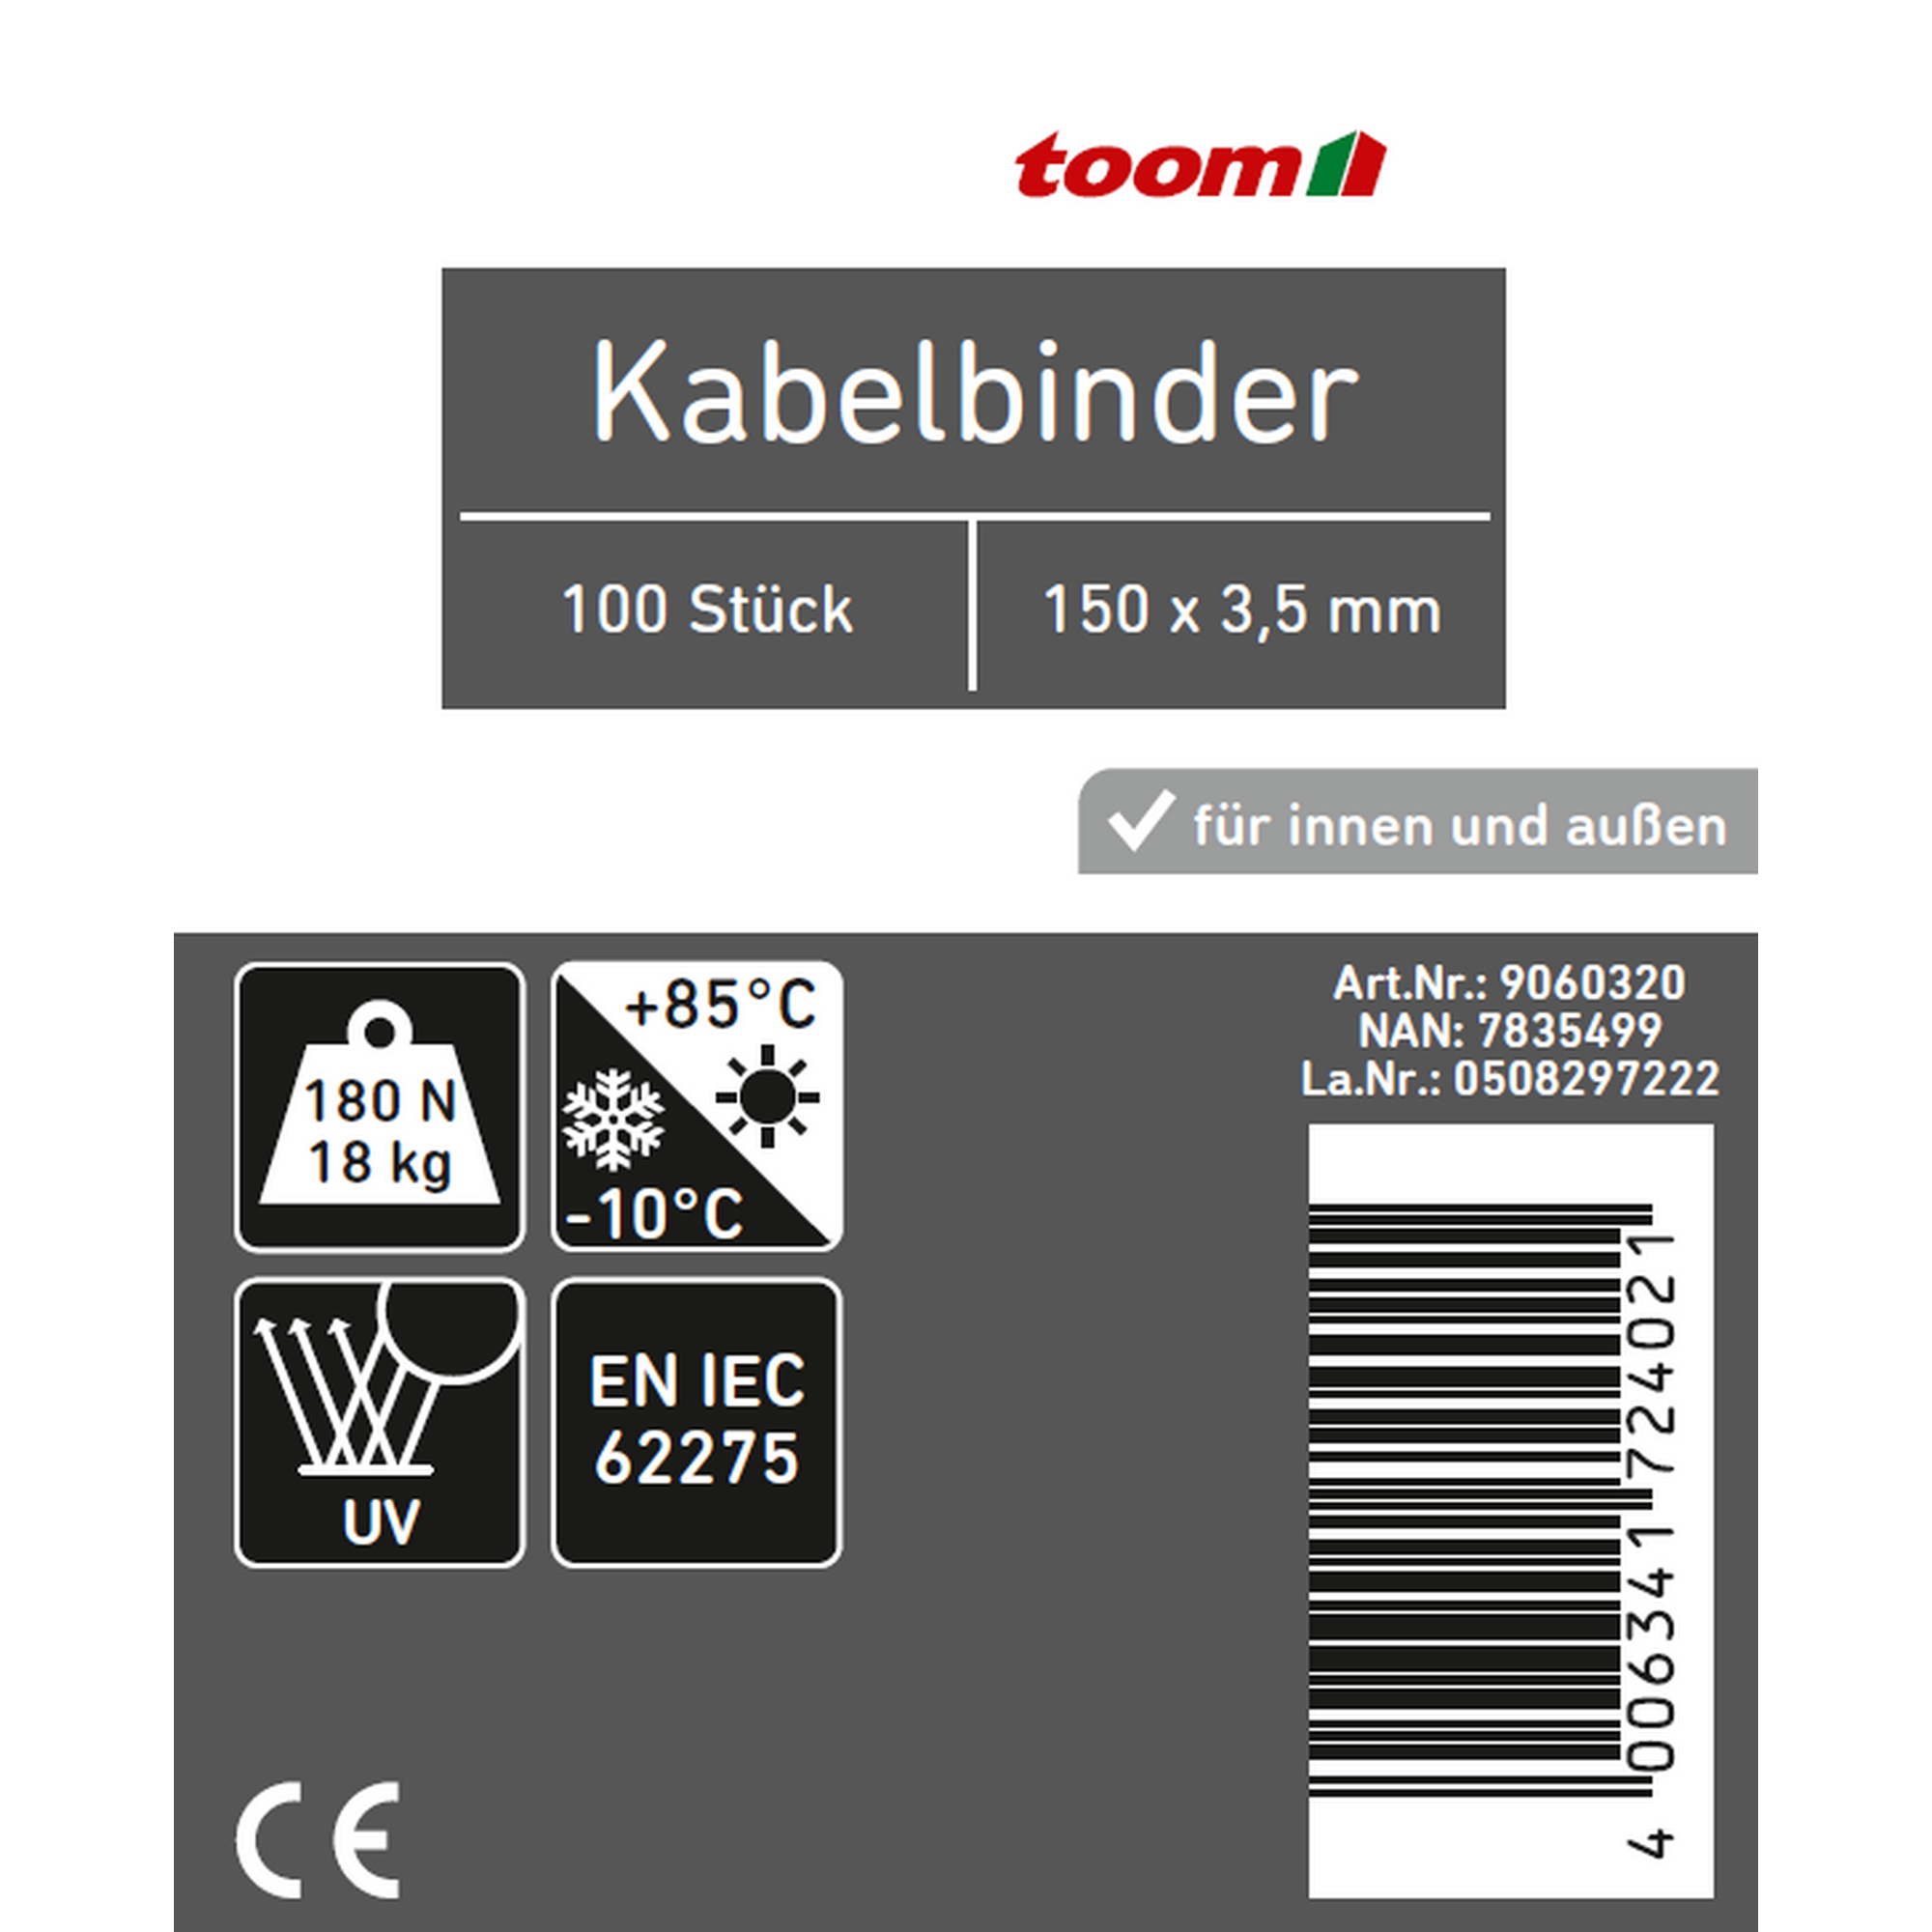 Kabelbinder schwarz 3,5 x 150 mm 100 Stück + product picture